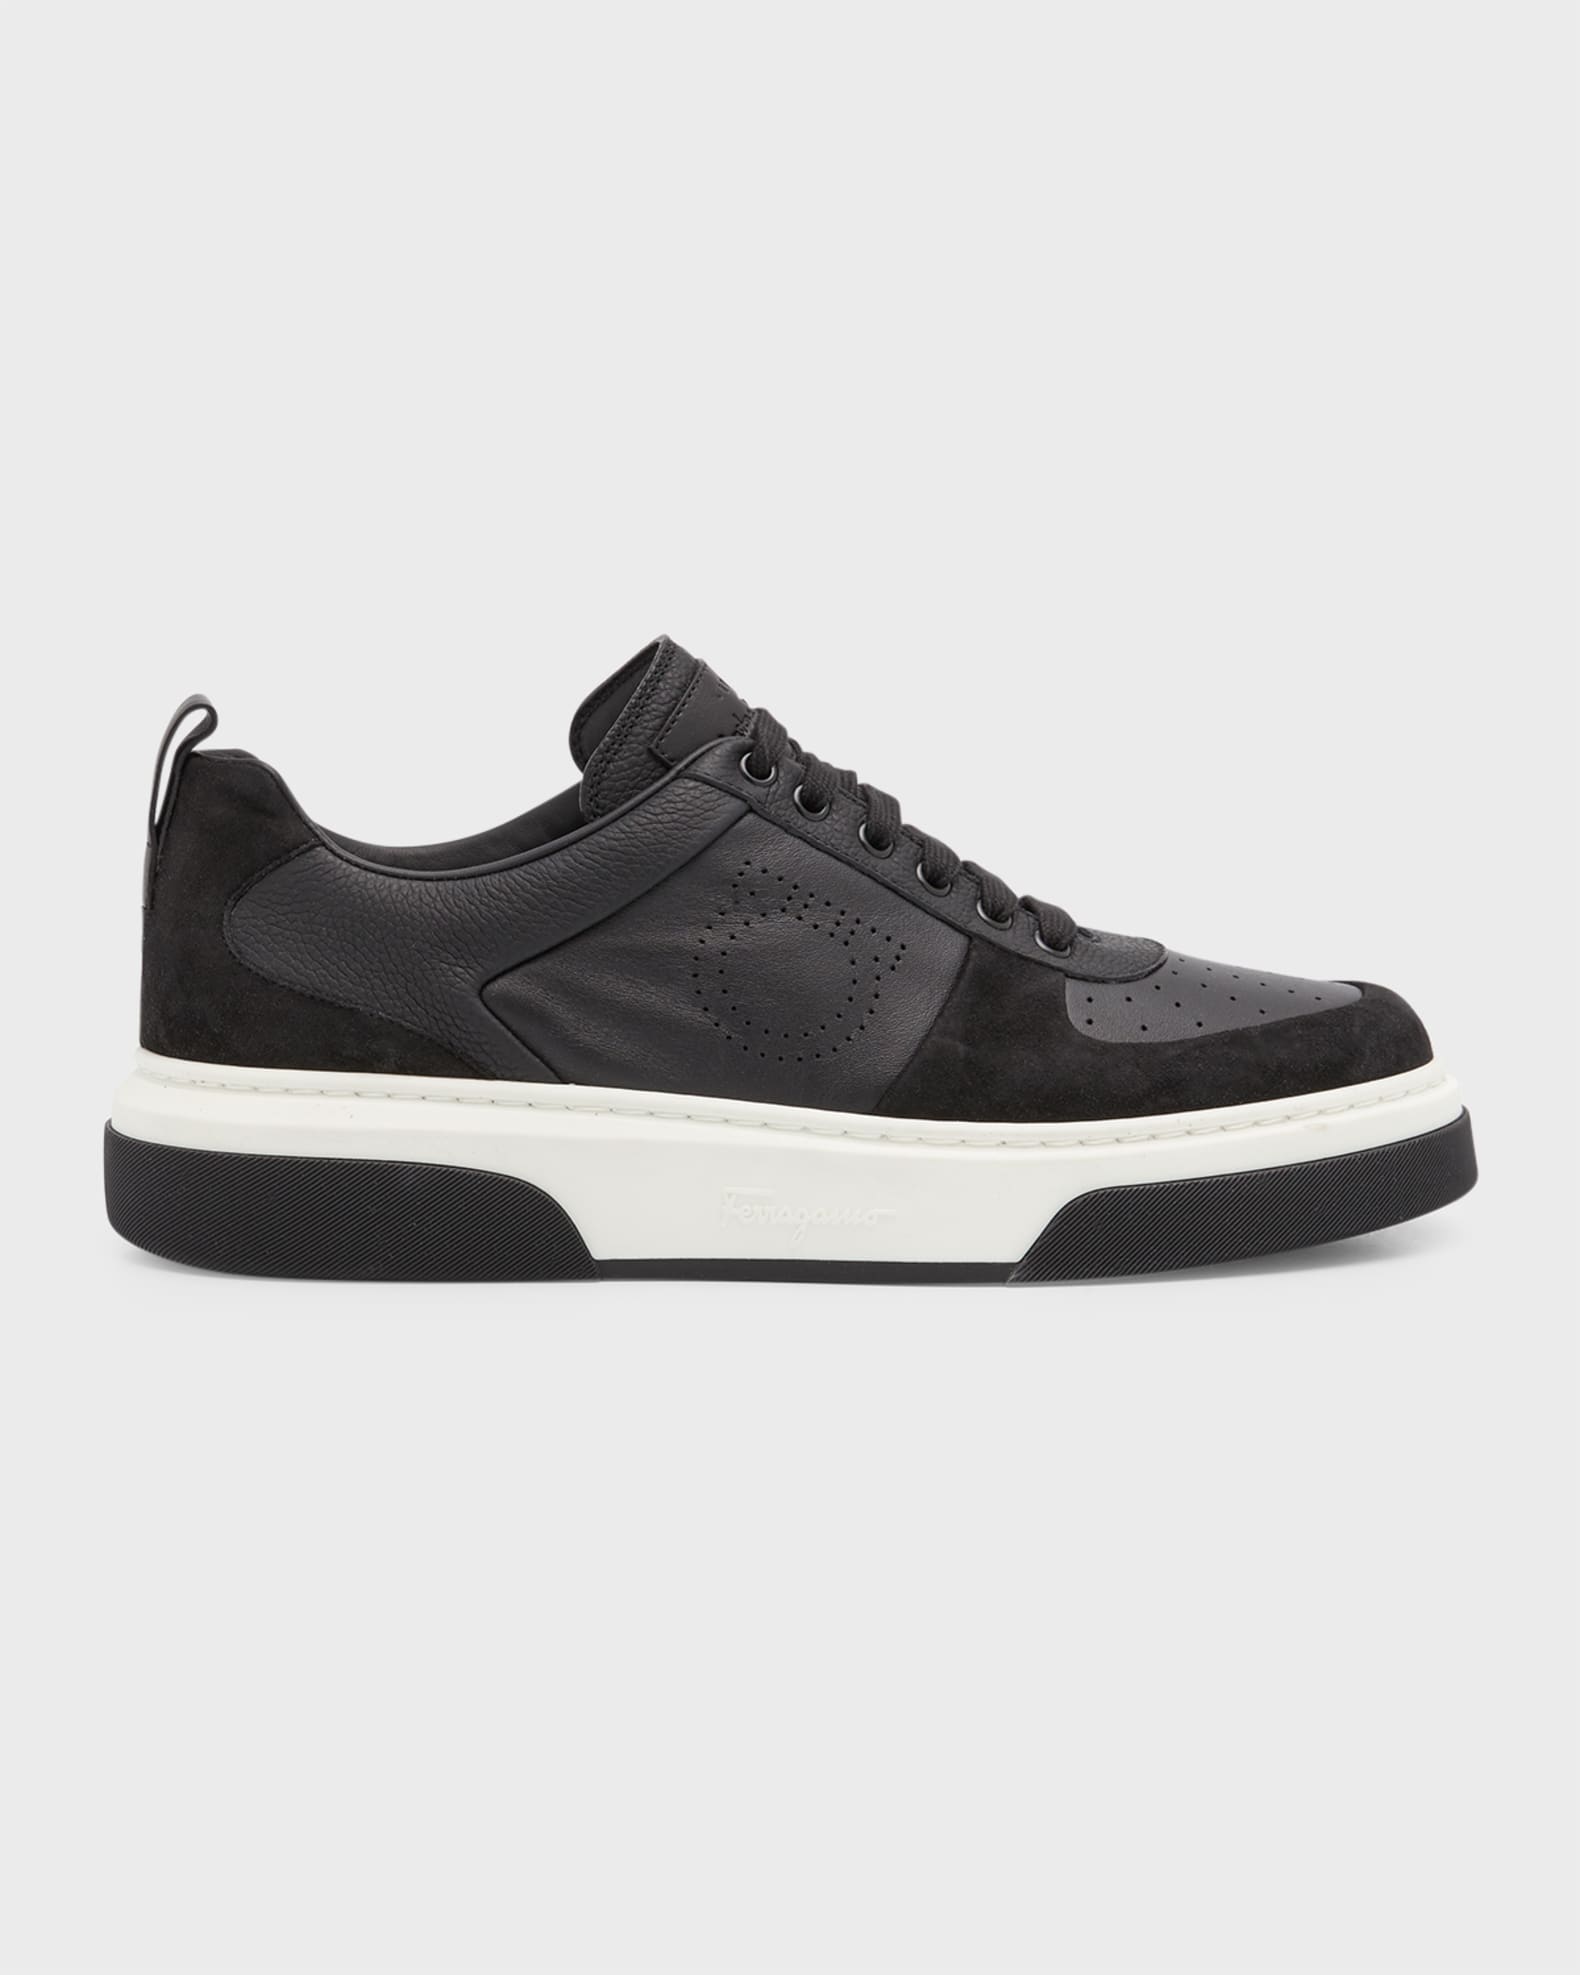 Ferragamo Men's Cassina Perforated Leather Low-Top Sneakers | Neiman Marcus